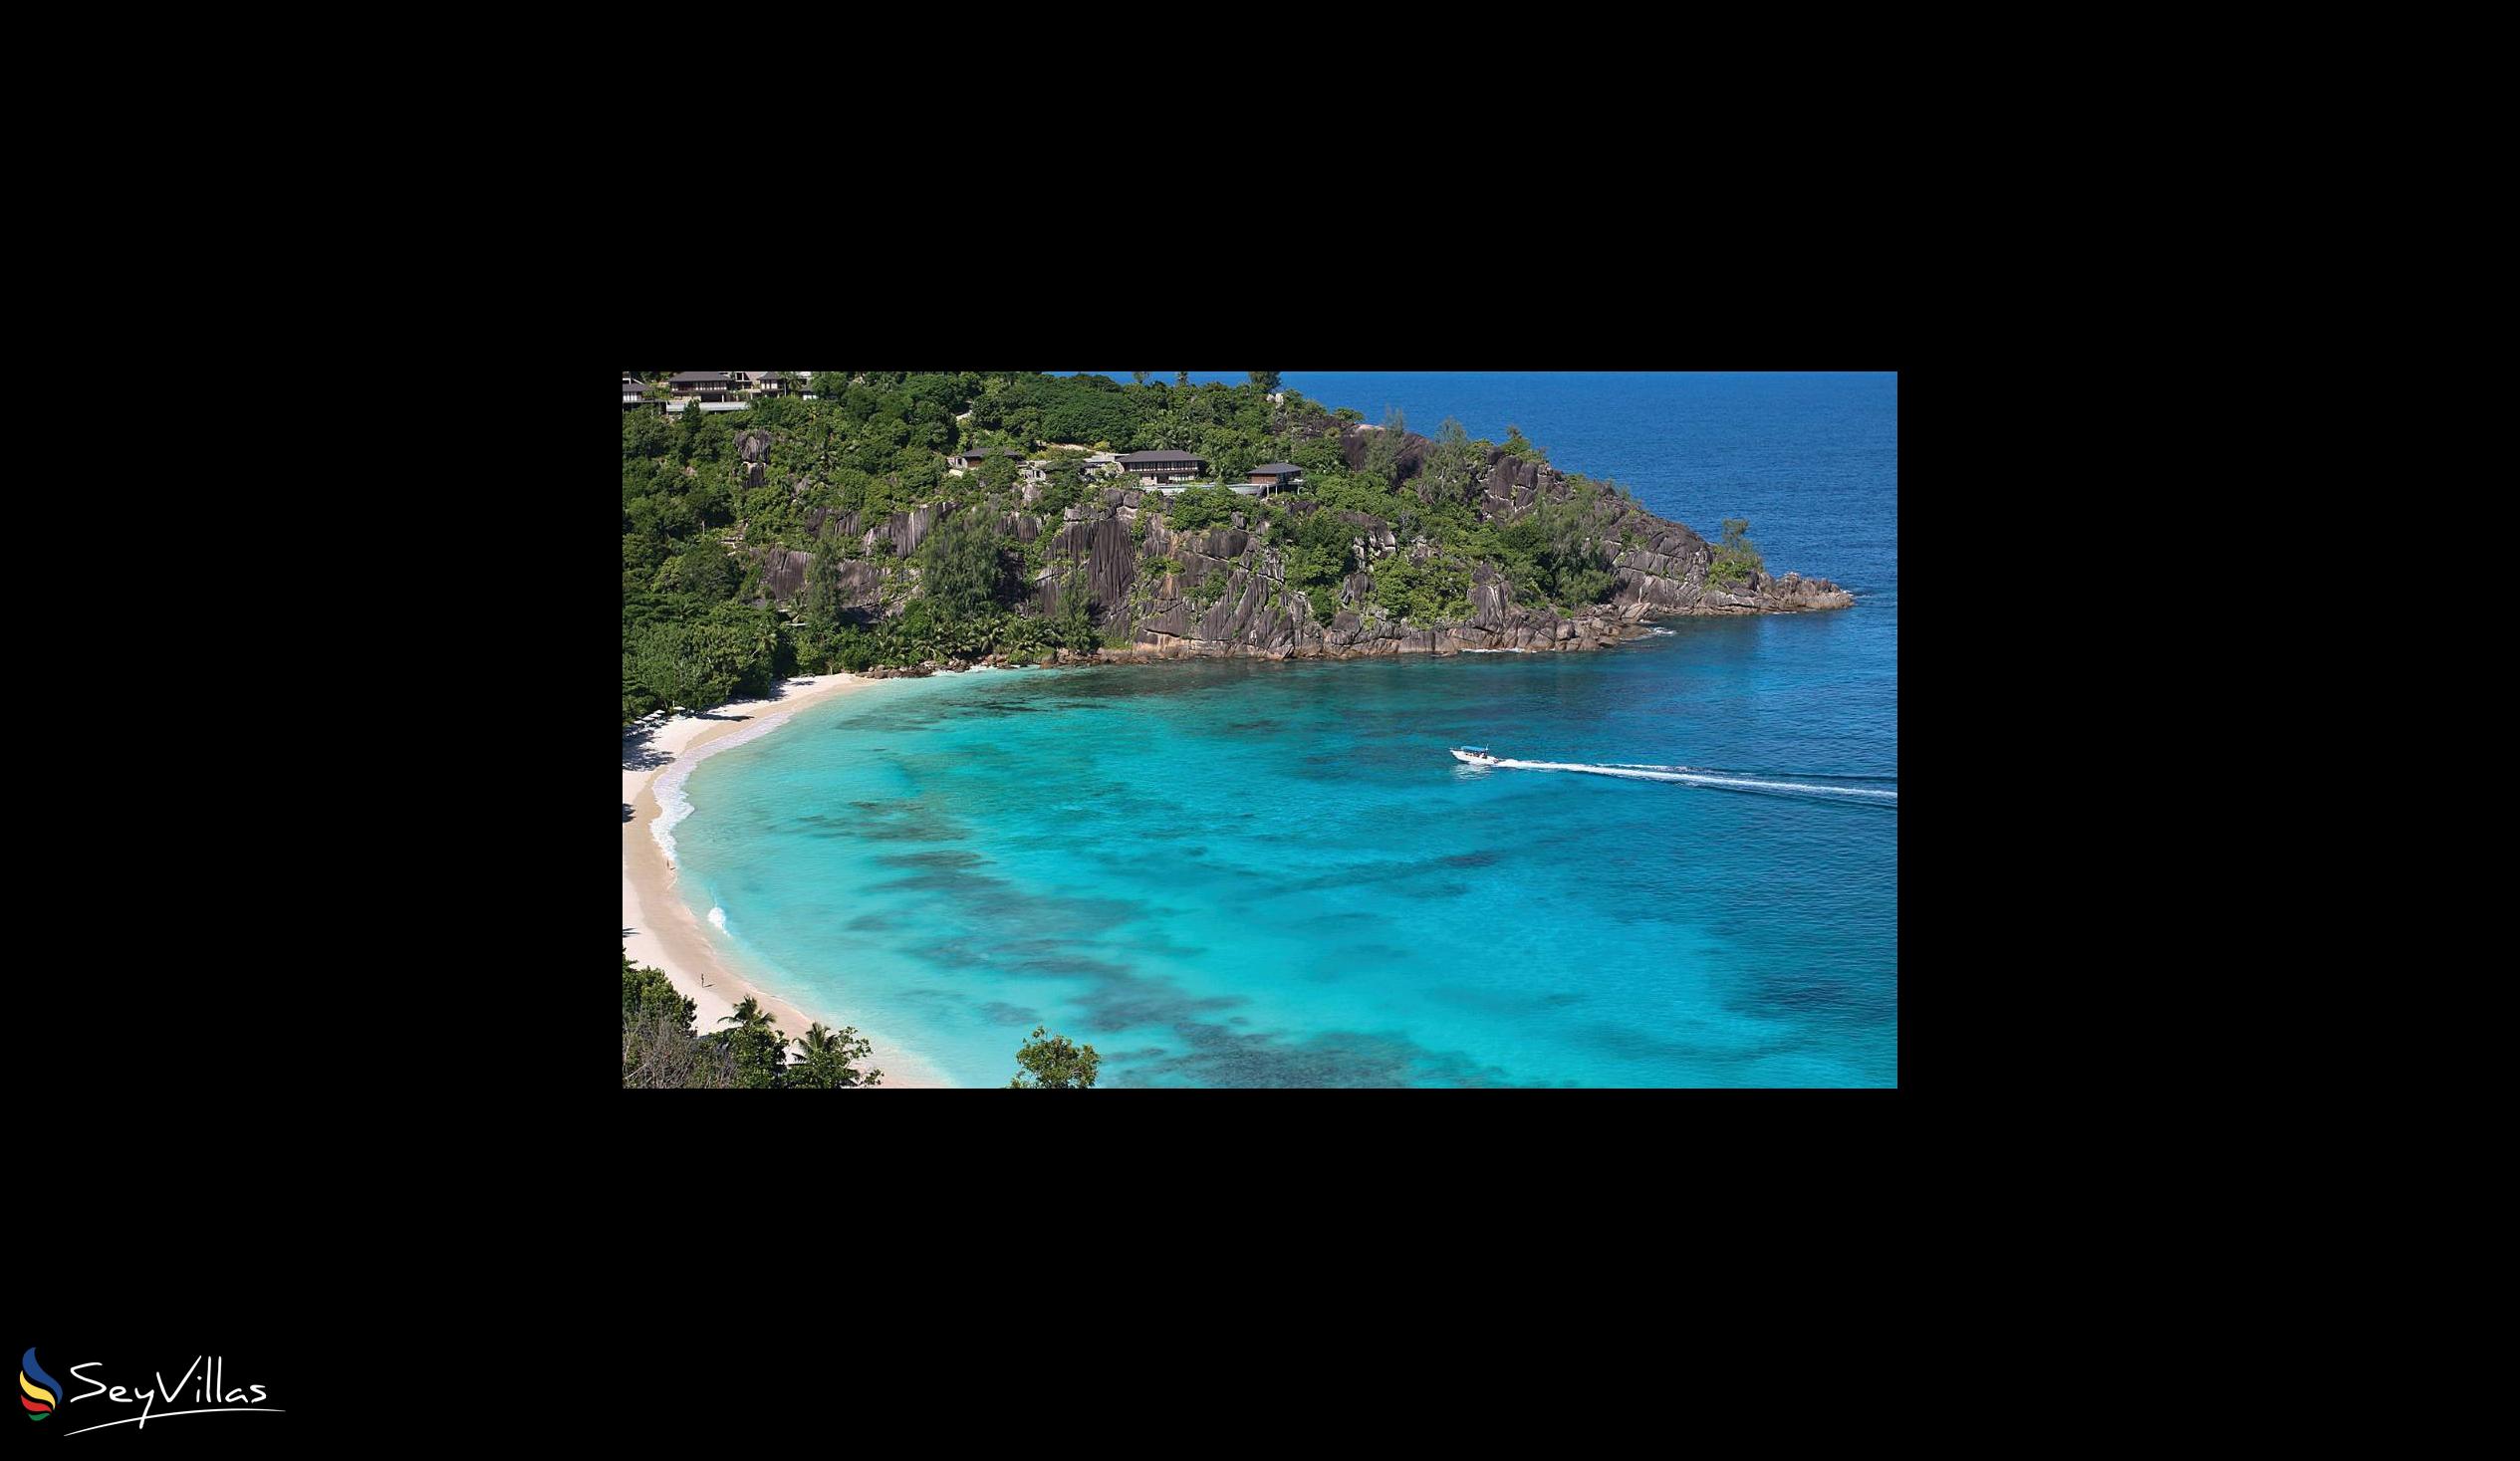 Foto 43: Four Seasons Resort - Location - Mahé (Seychelles)